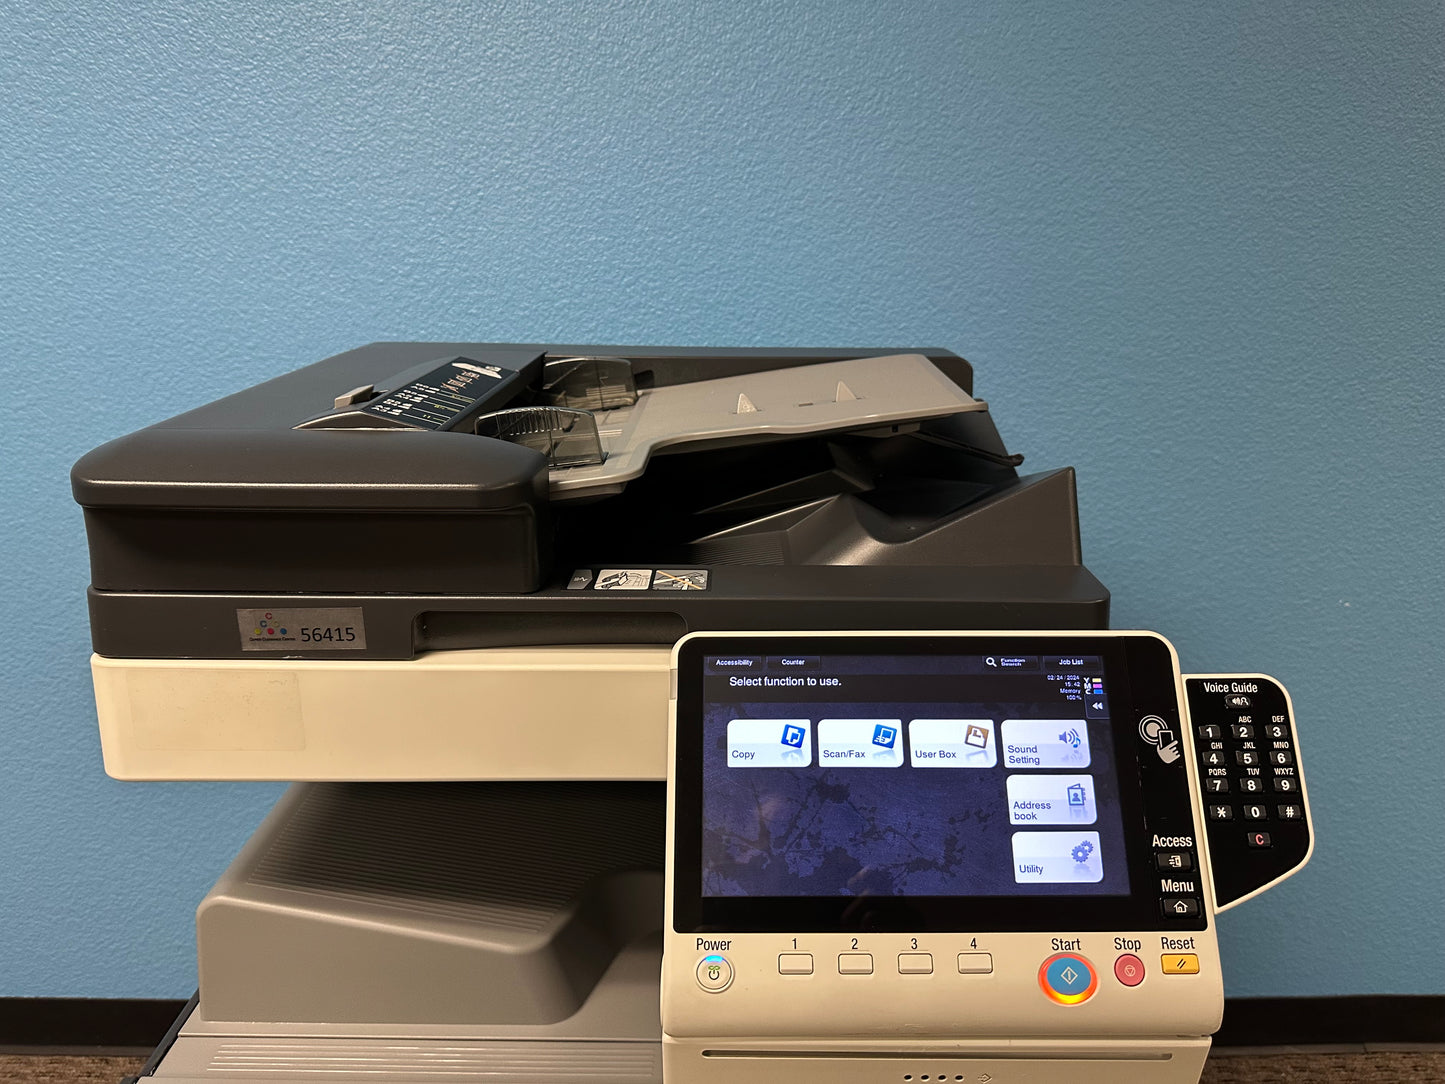 Demo Konica Minolta Bizhub C258 Color Copier Printer Scanner Fax Only 2k